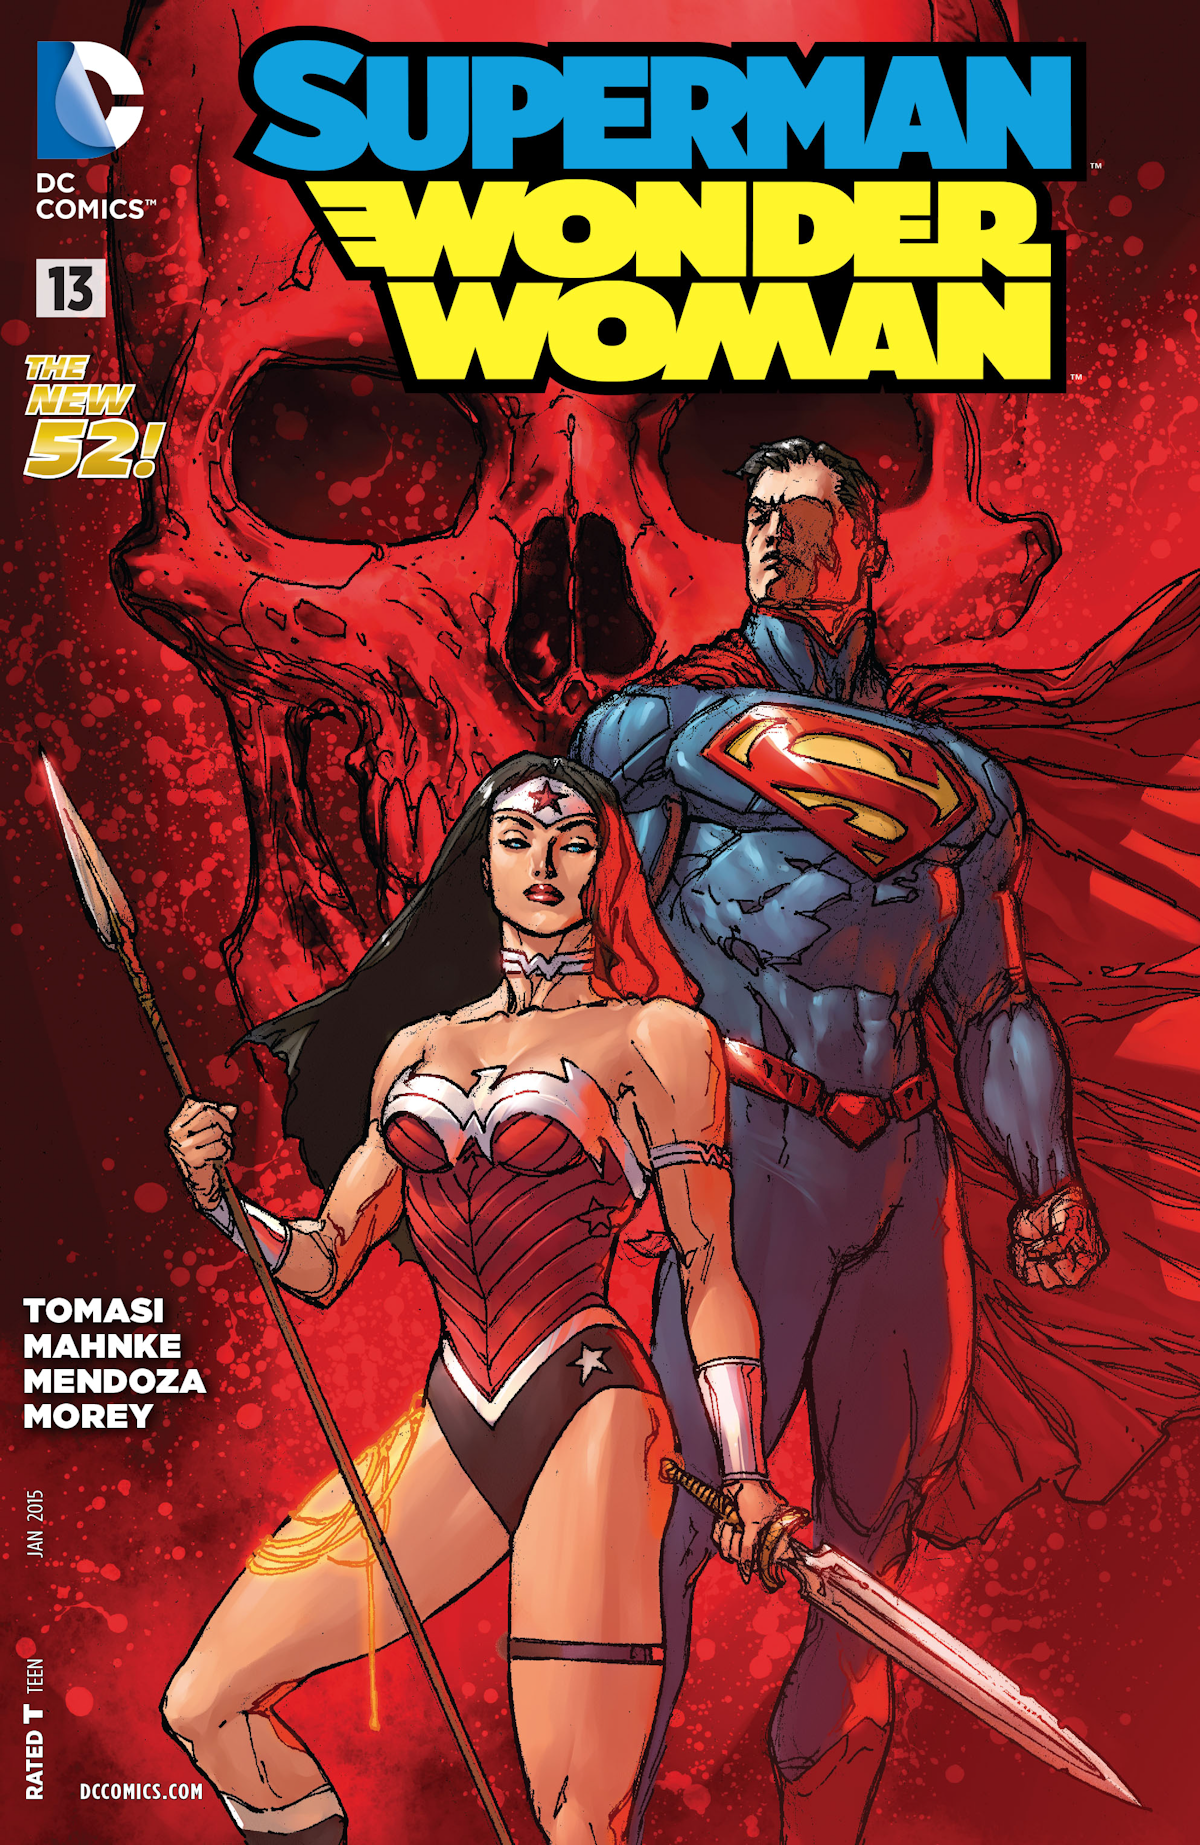 Superman/Wonder Woman 13 (Cover A)